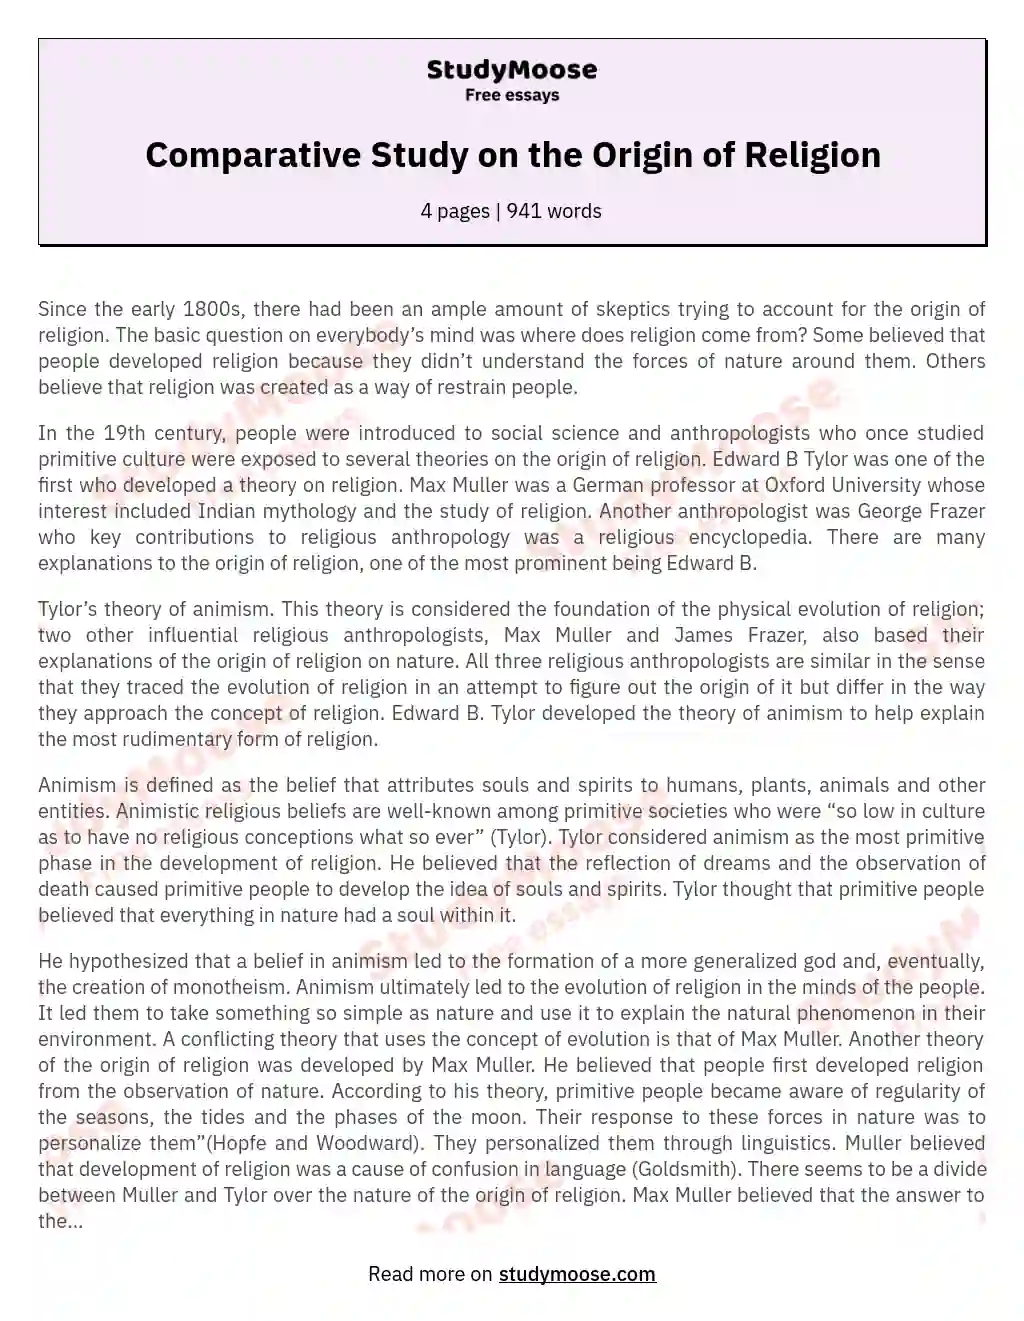 Exploring Religion's Origins: 19th-Century Perspectives essay